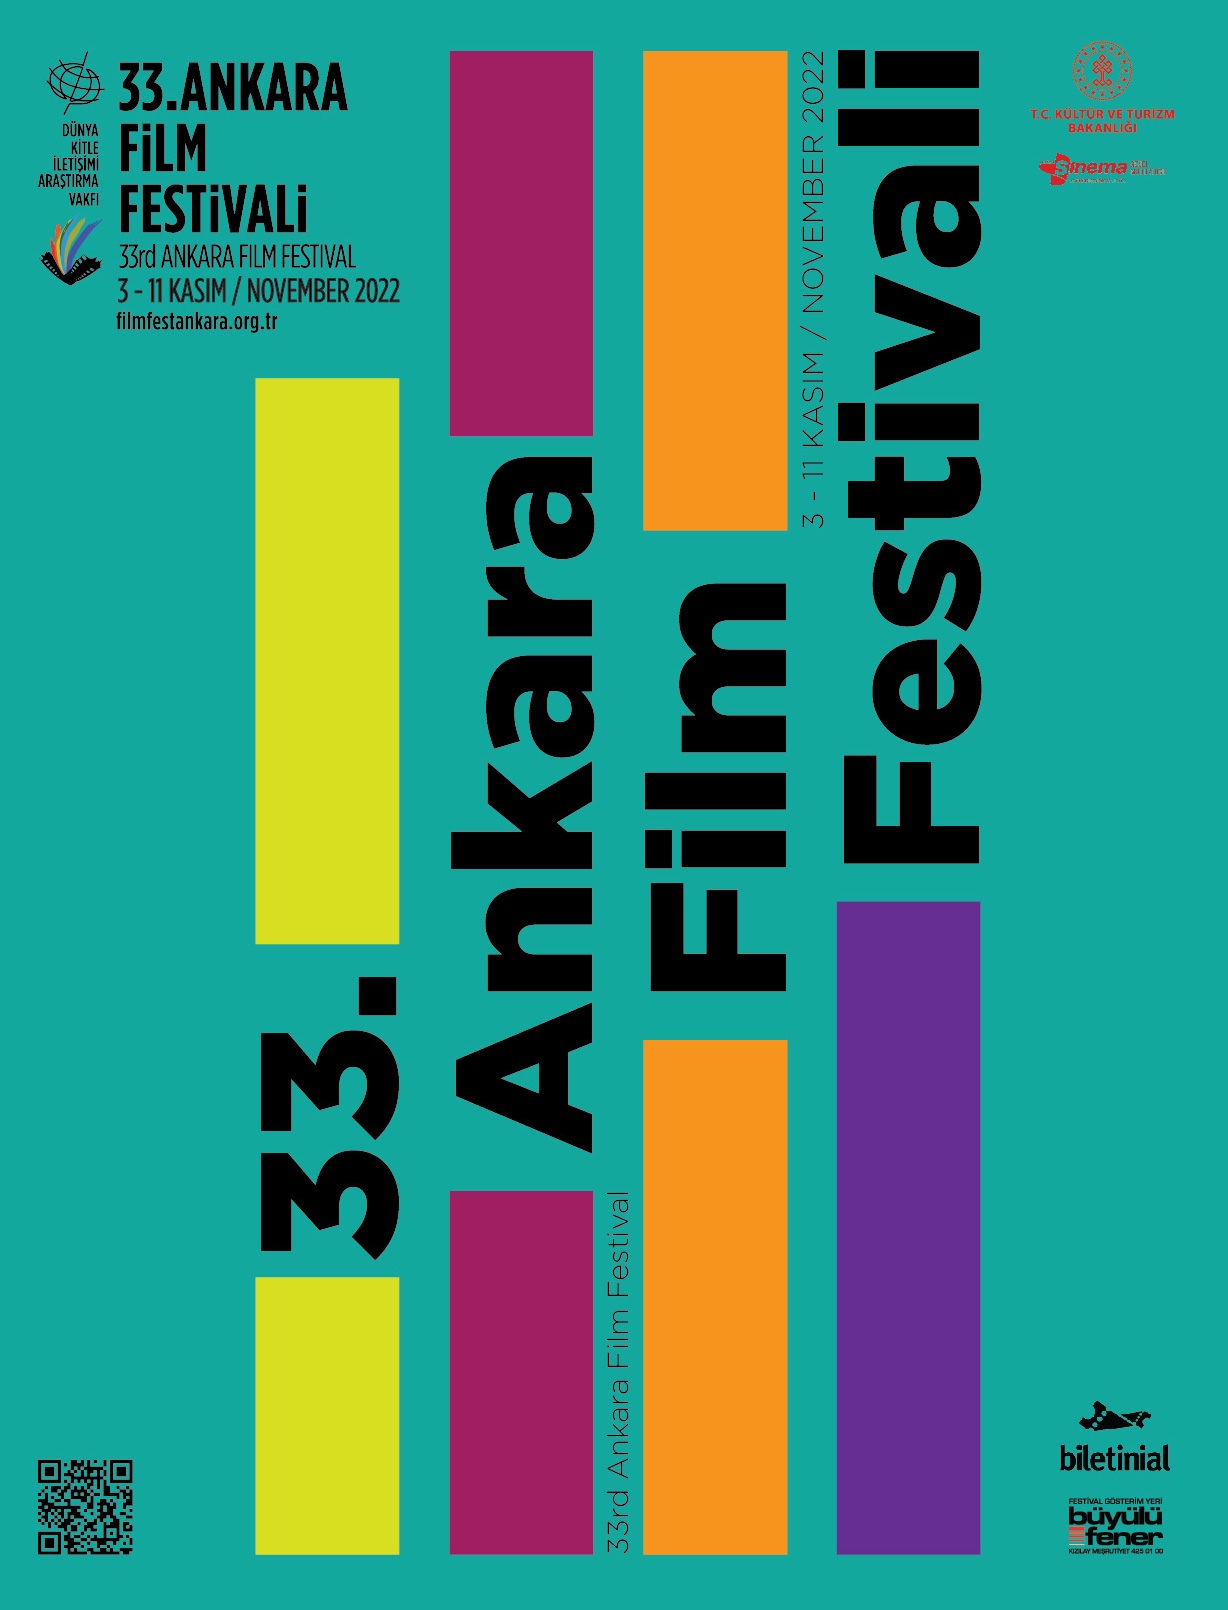 33. Ankara Film Festivali Başladı!